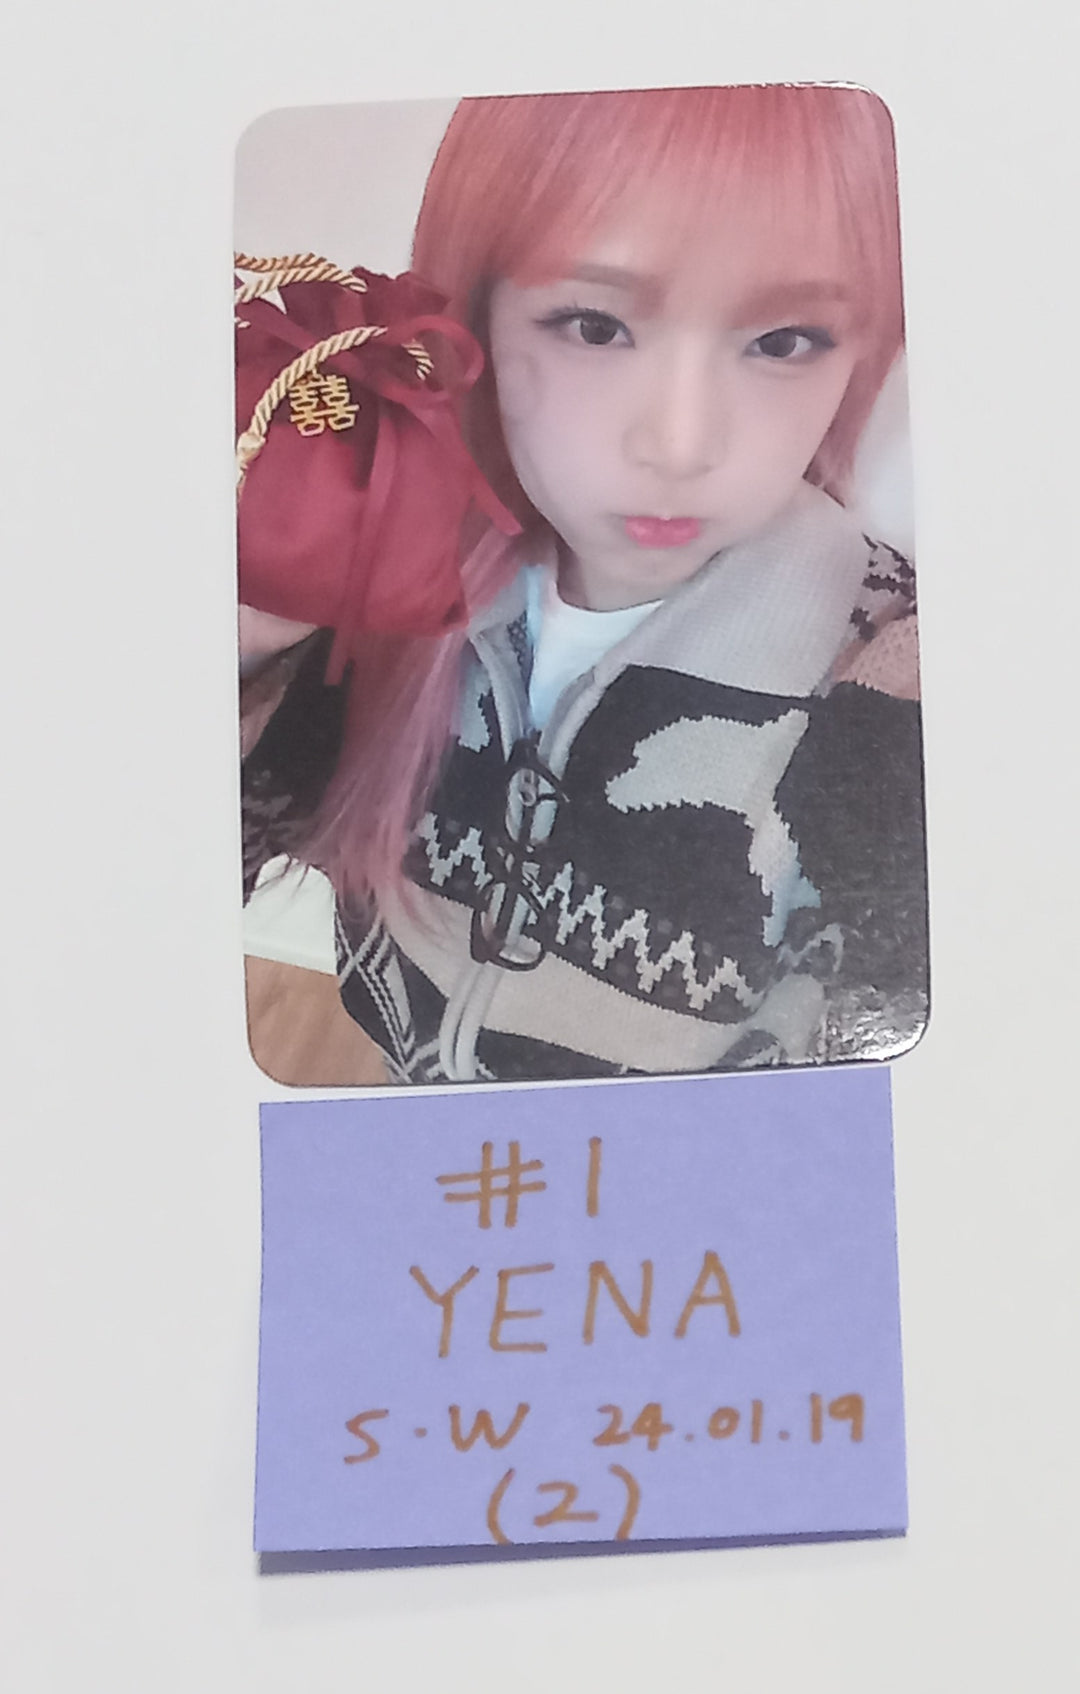 YENA "Good Morning" - Soundwave Fansign Event Photocard [24.1.30]